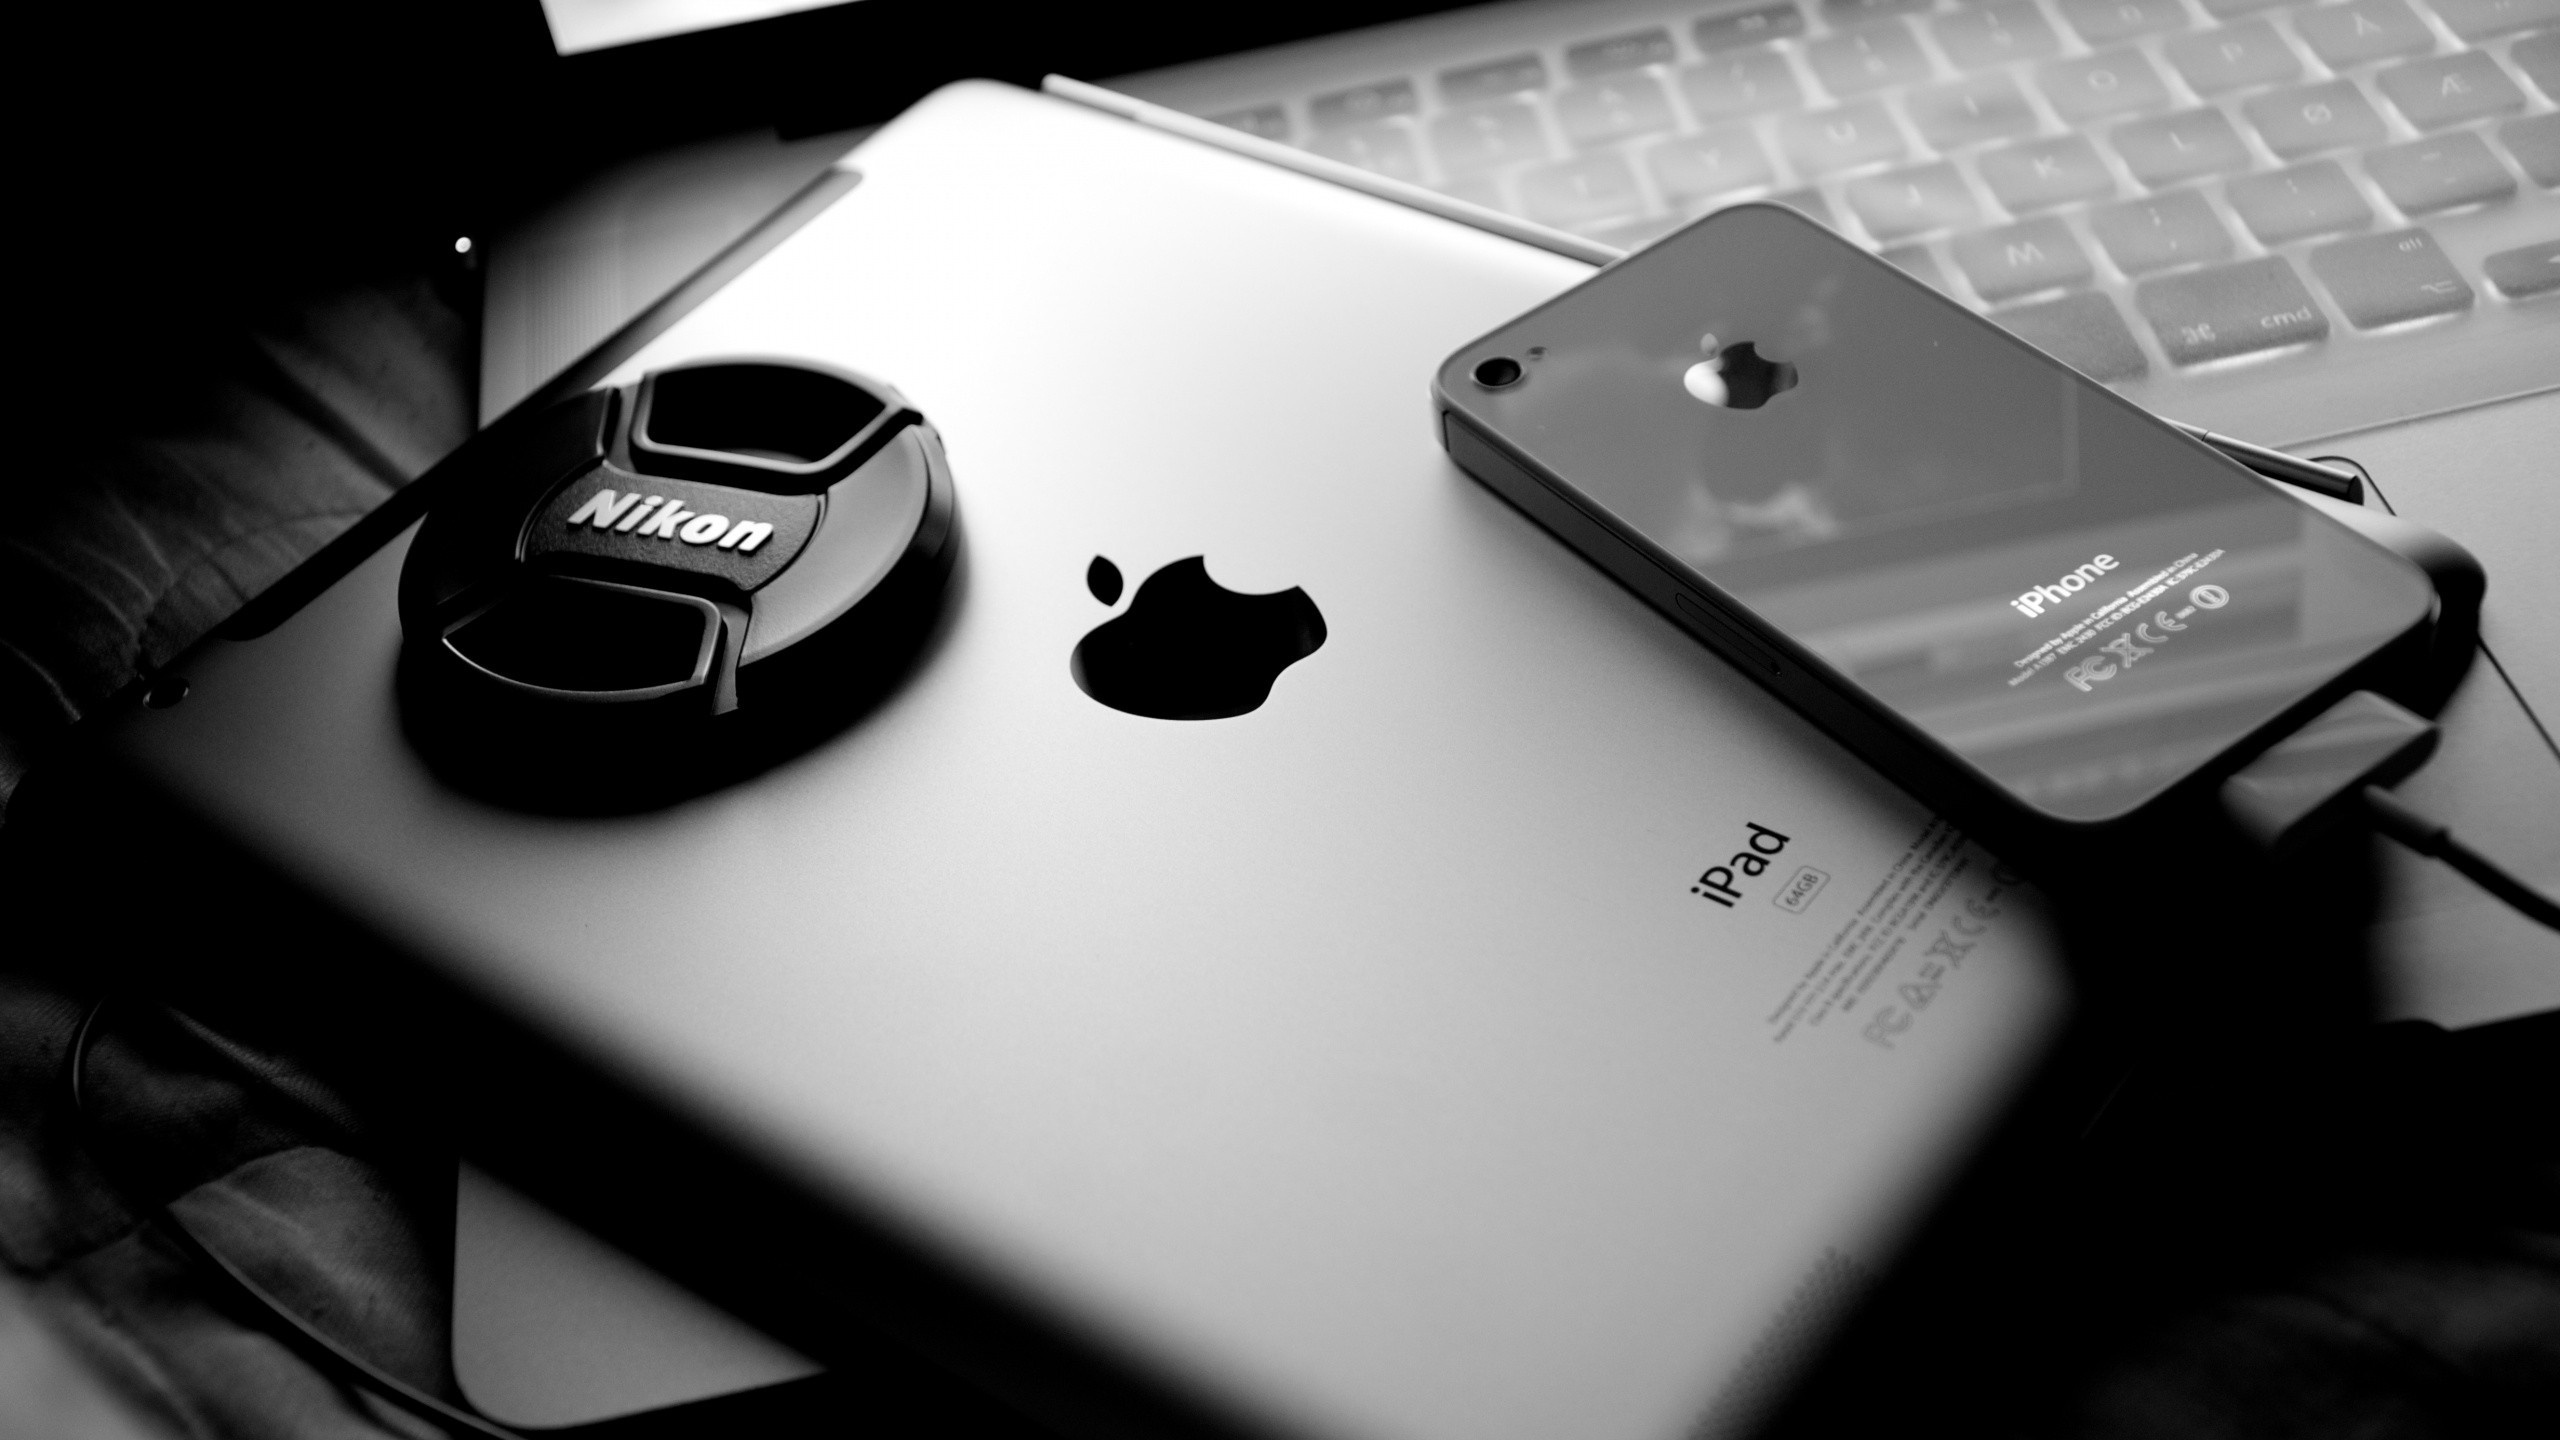 ipad 2, iphone 4, nikon, macbook pro, apple, iphone 4s